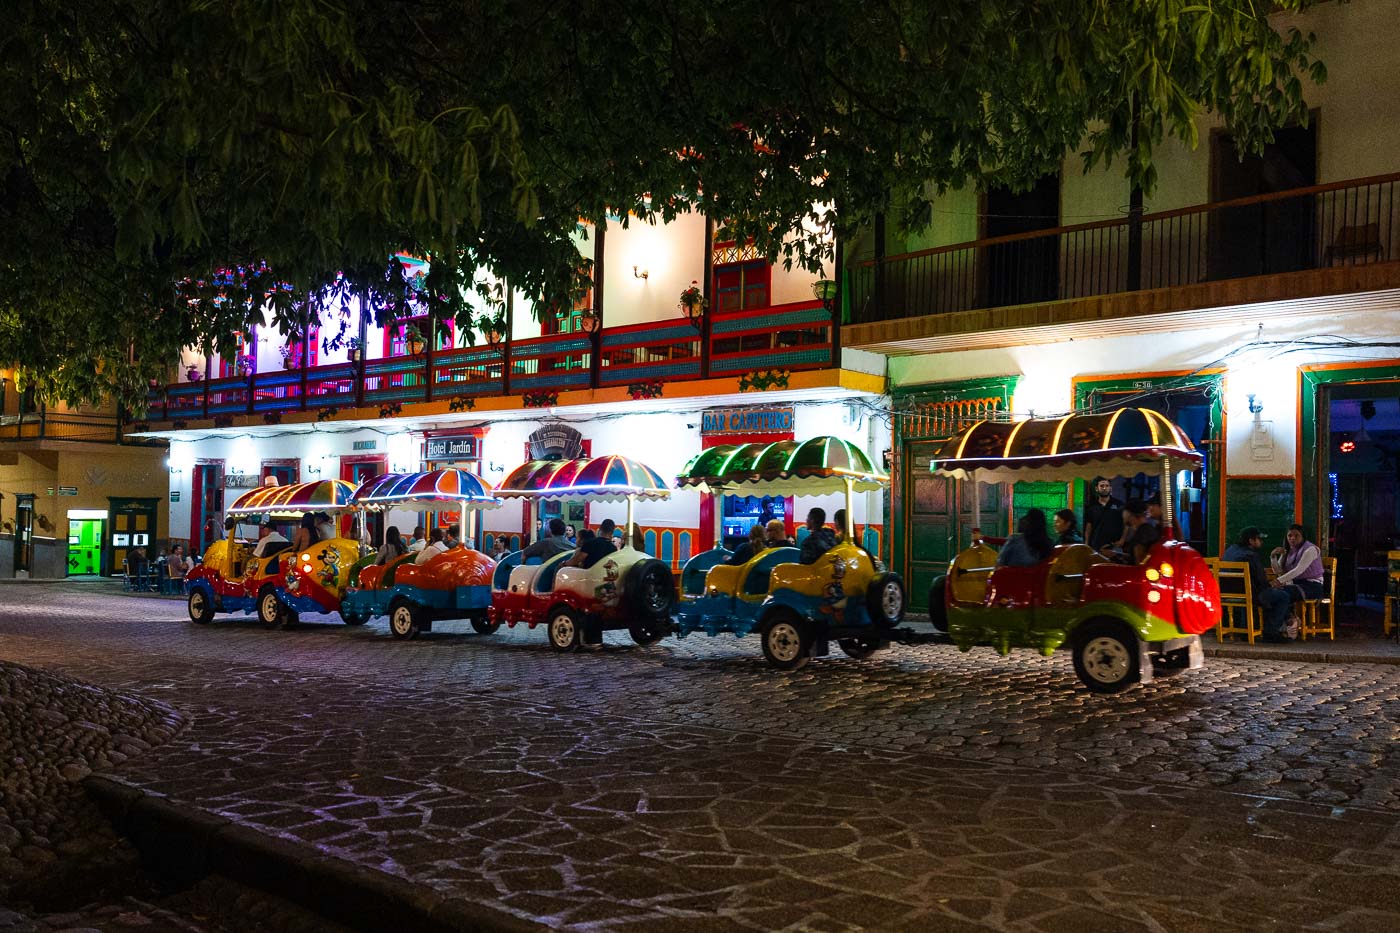 A colourful trail driving around at night in Plaza de Libertador in Jardin.